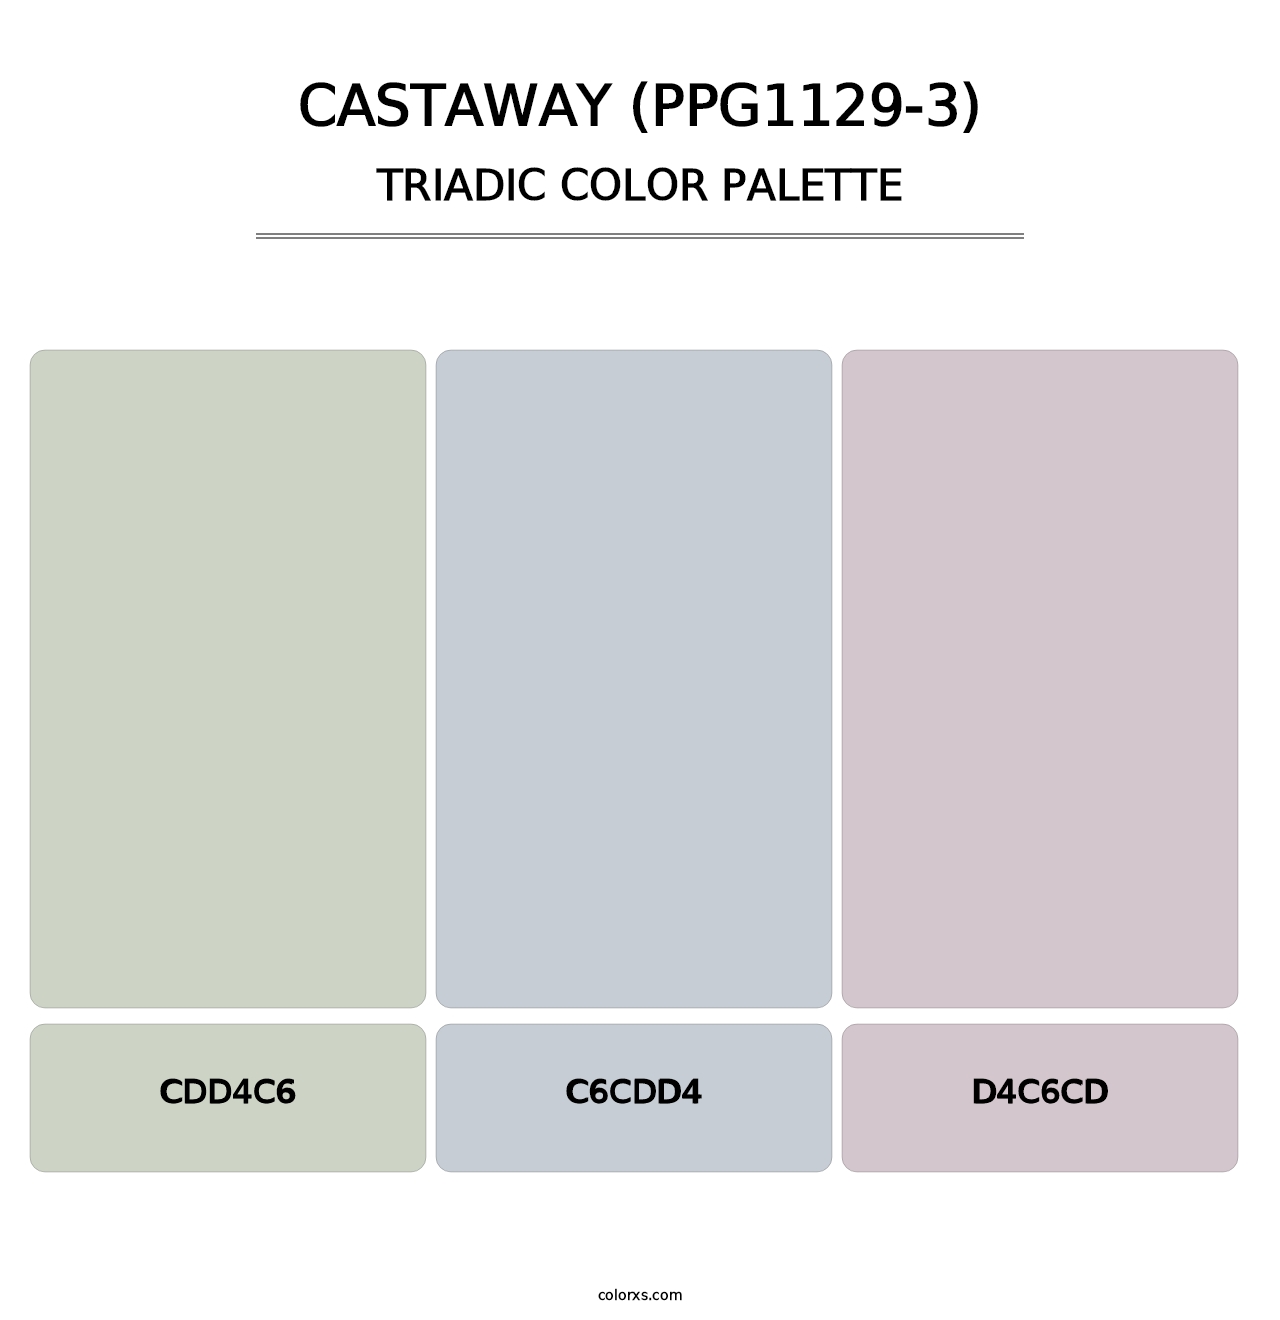 Castaway (PPG1129-3) - Triadic Color Palette